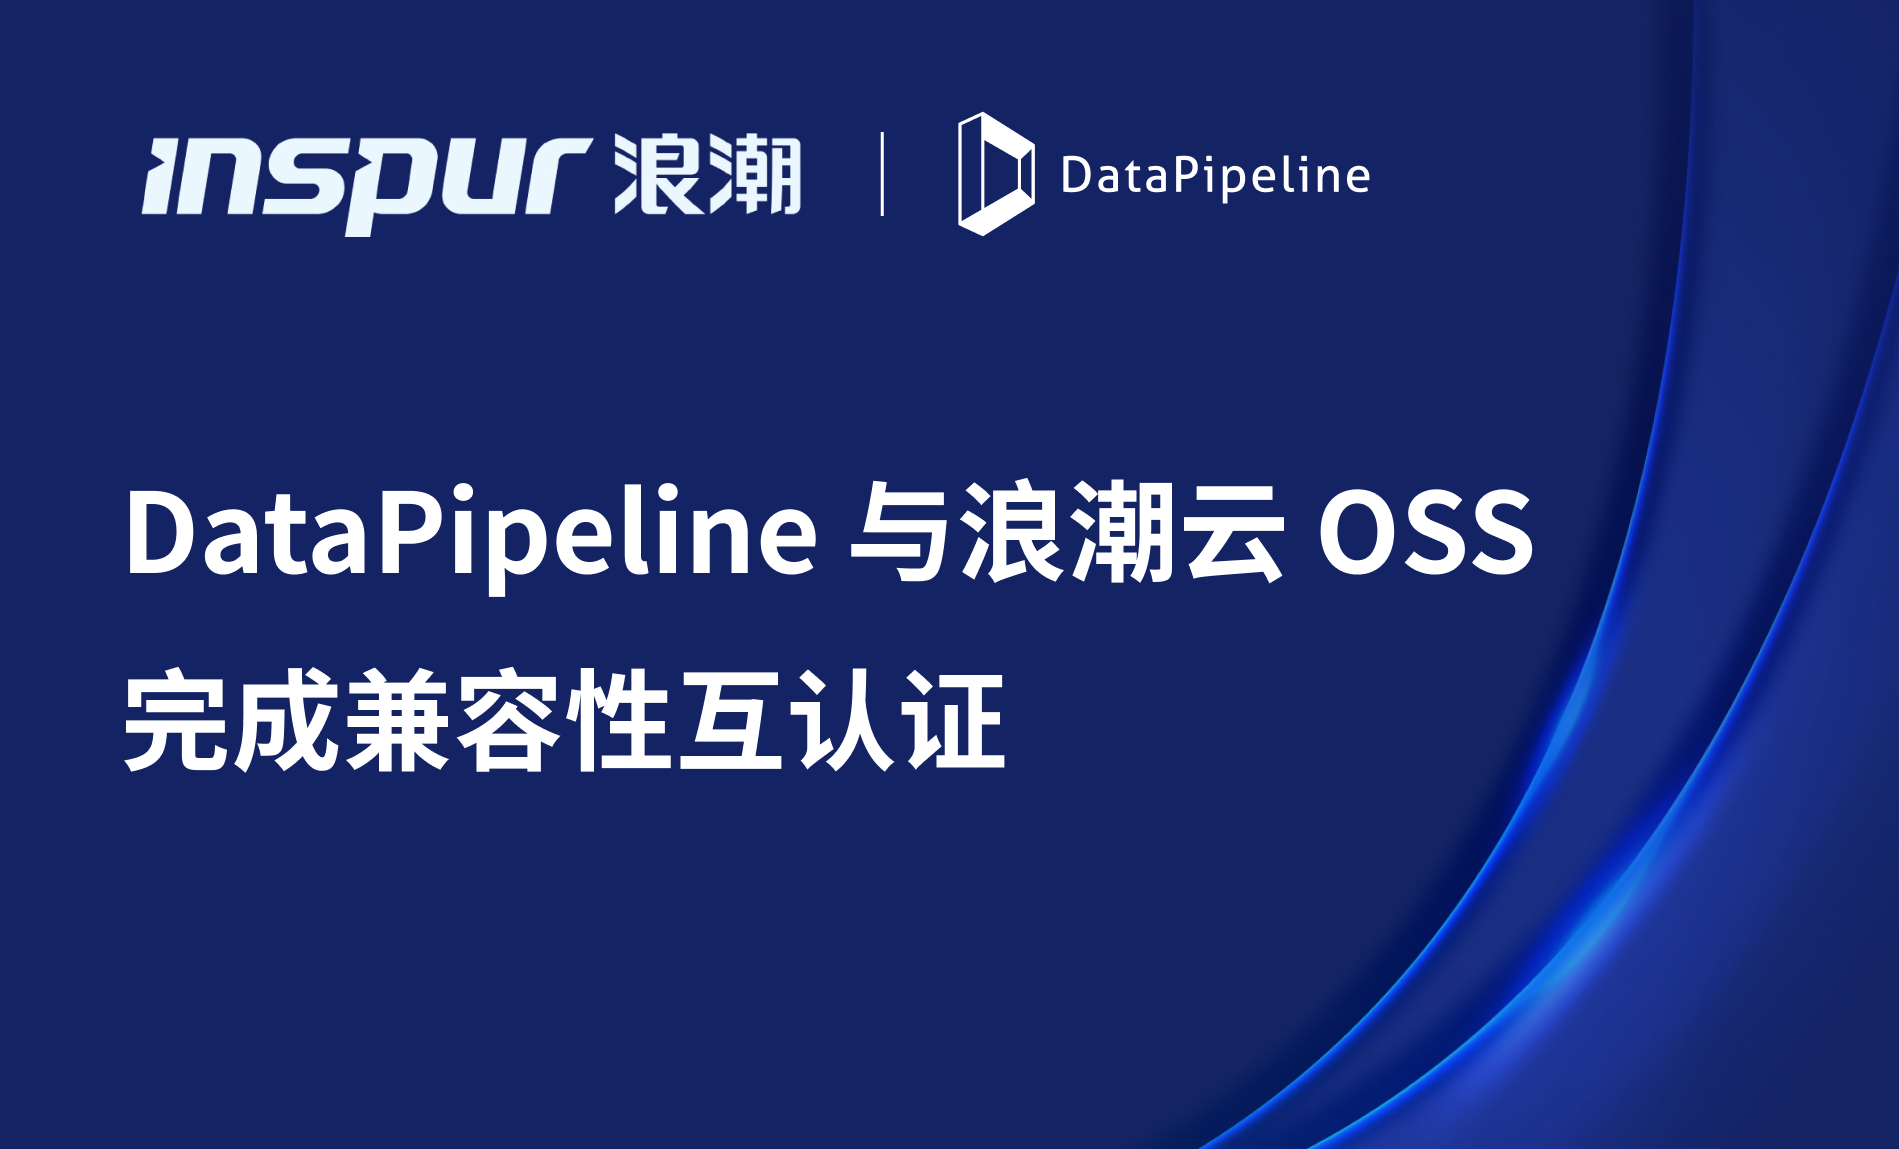 DataPipeline与浪潮云OSS完成产品兼容性互认证，共塑数据管理新生态